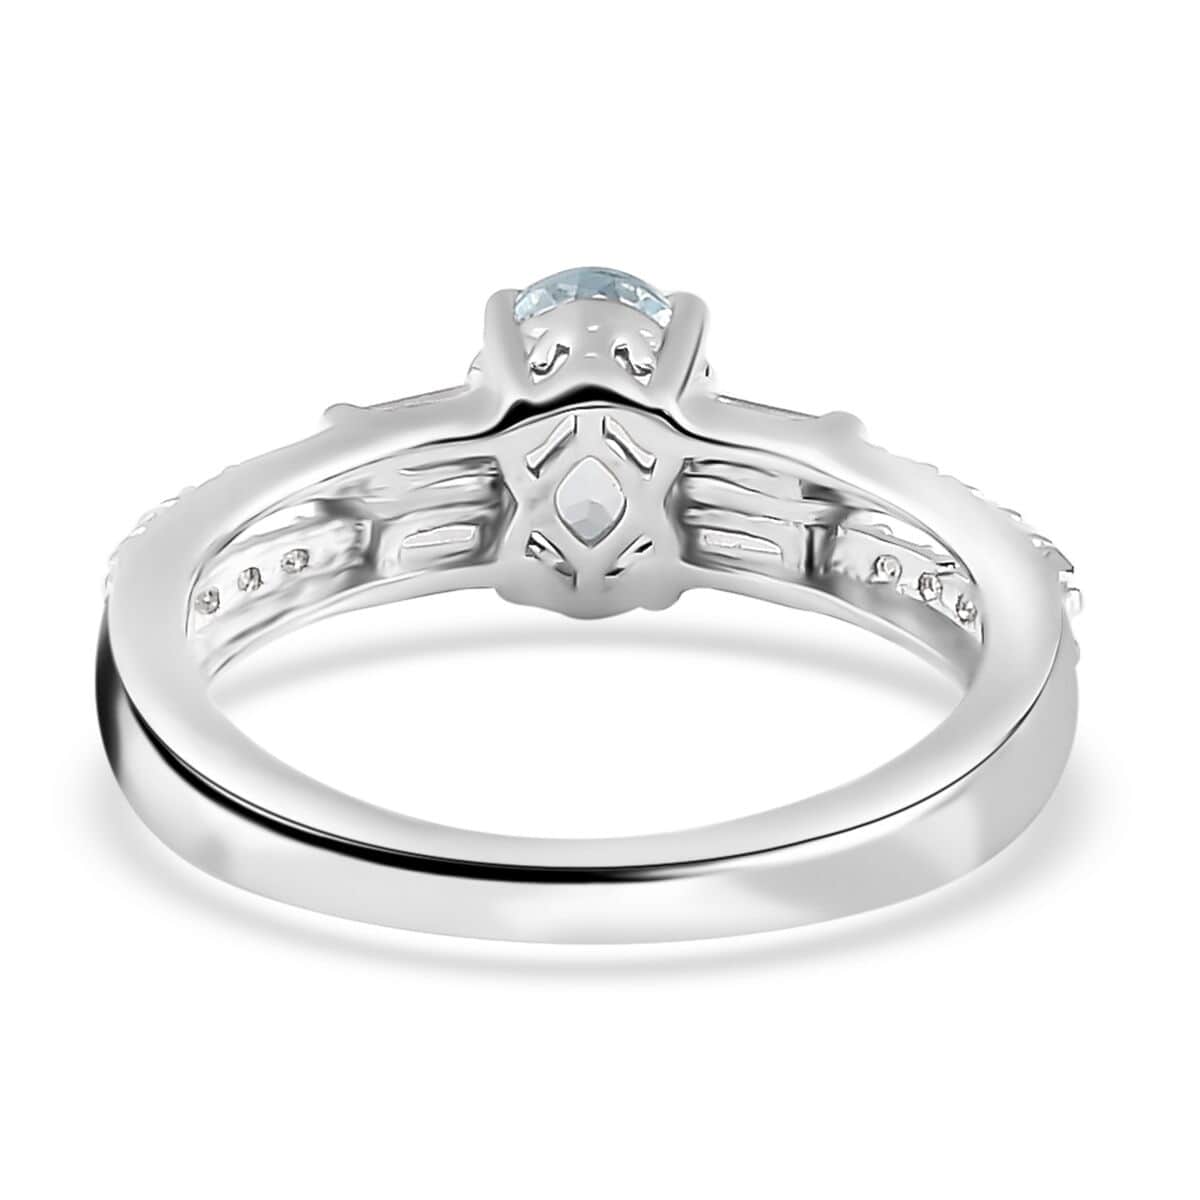 Premium Mangoro Aquamarine and White Zircon Ring in Platinum Over Sterling Silver (Size 6.0) 1.15 ctw image number 4